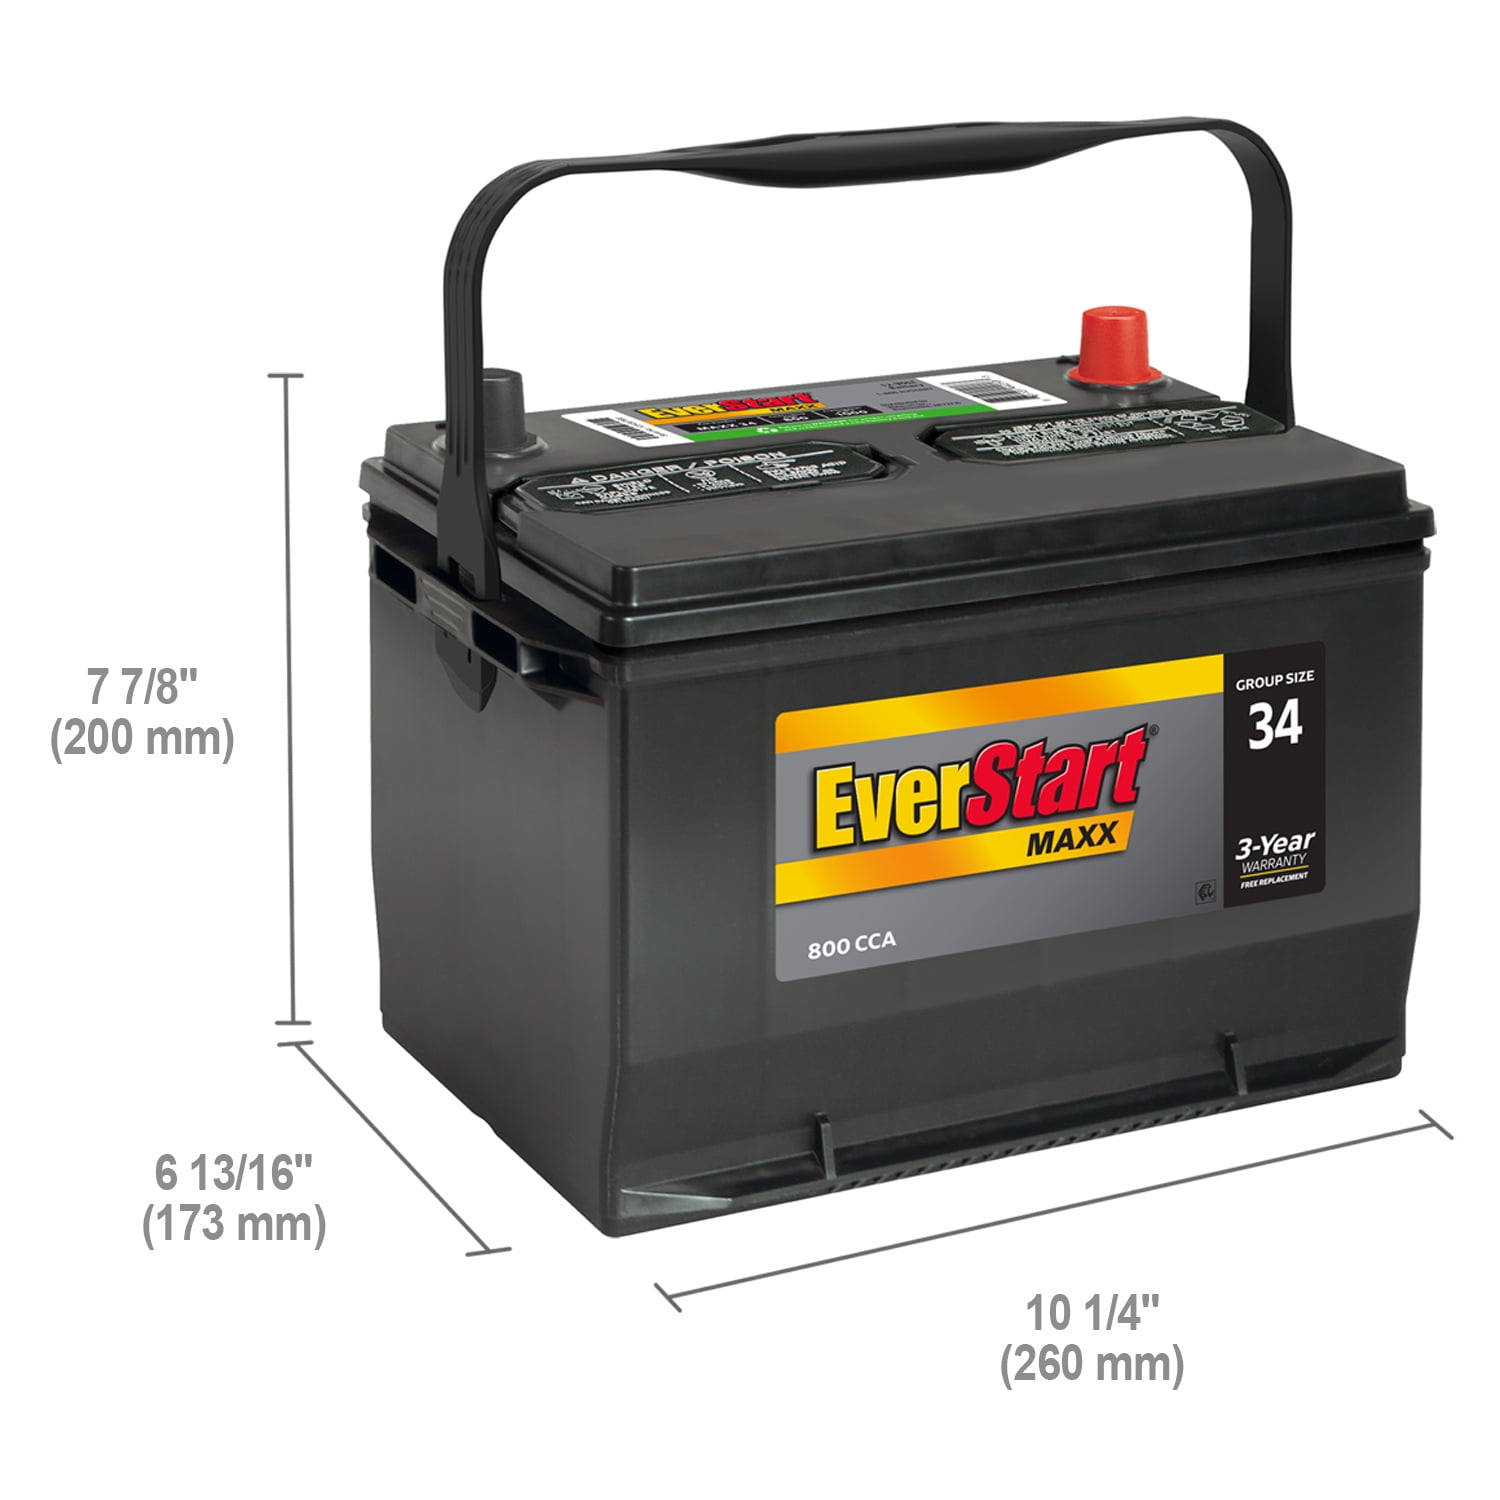 EverStart Maxx Lead Acid Automotive Battery, Group Size 34N (12 Volt/800  CCA) 